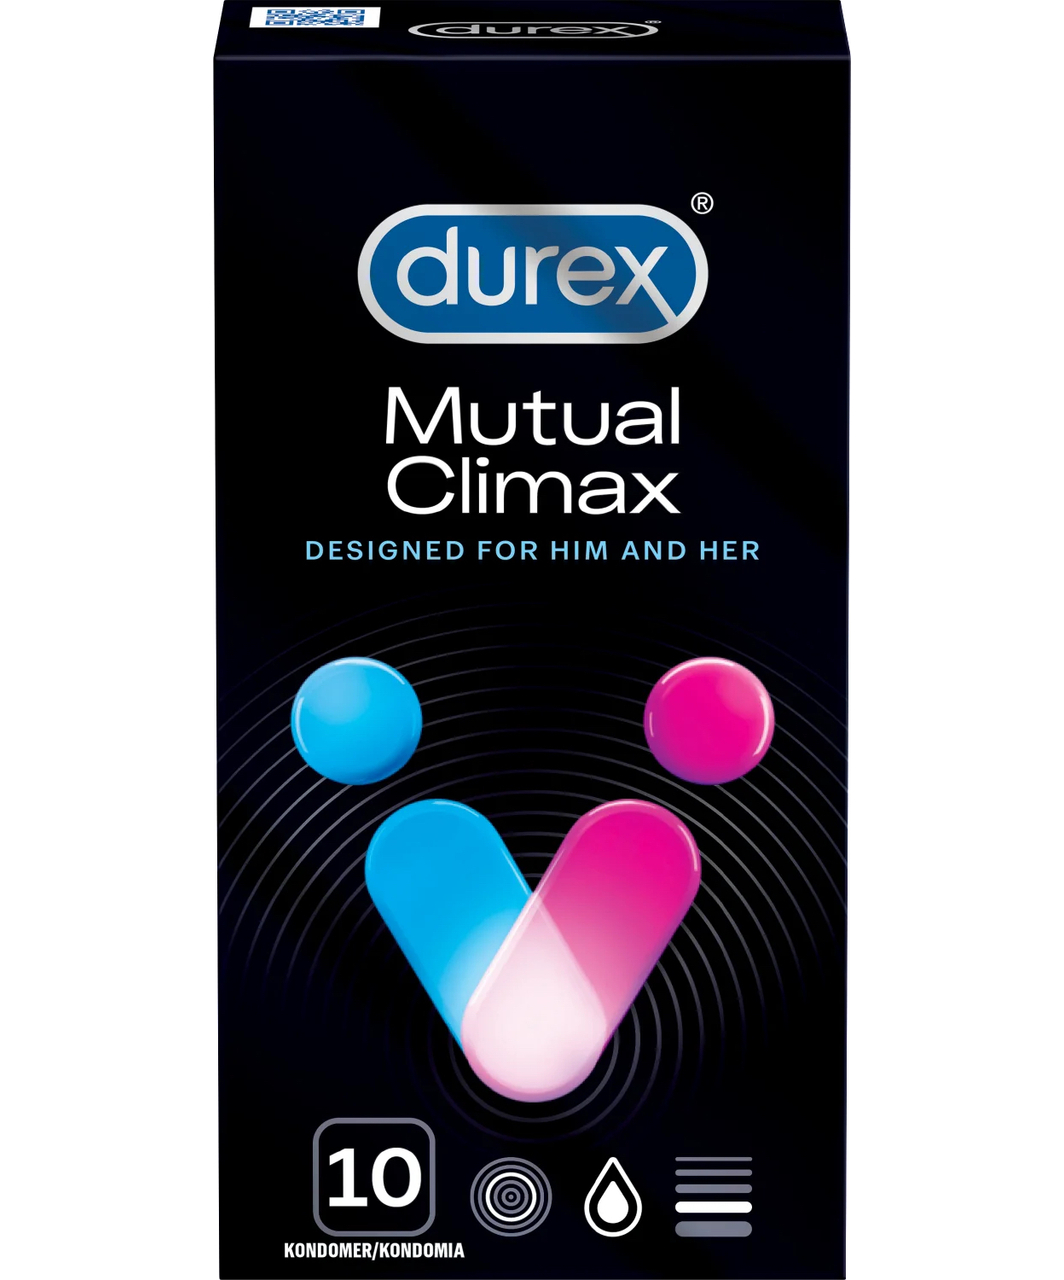 Durex Mutual Climax презервативы (10 шт.)